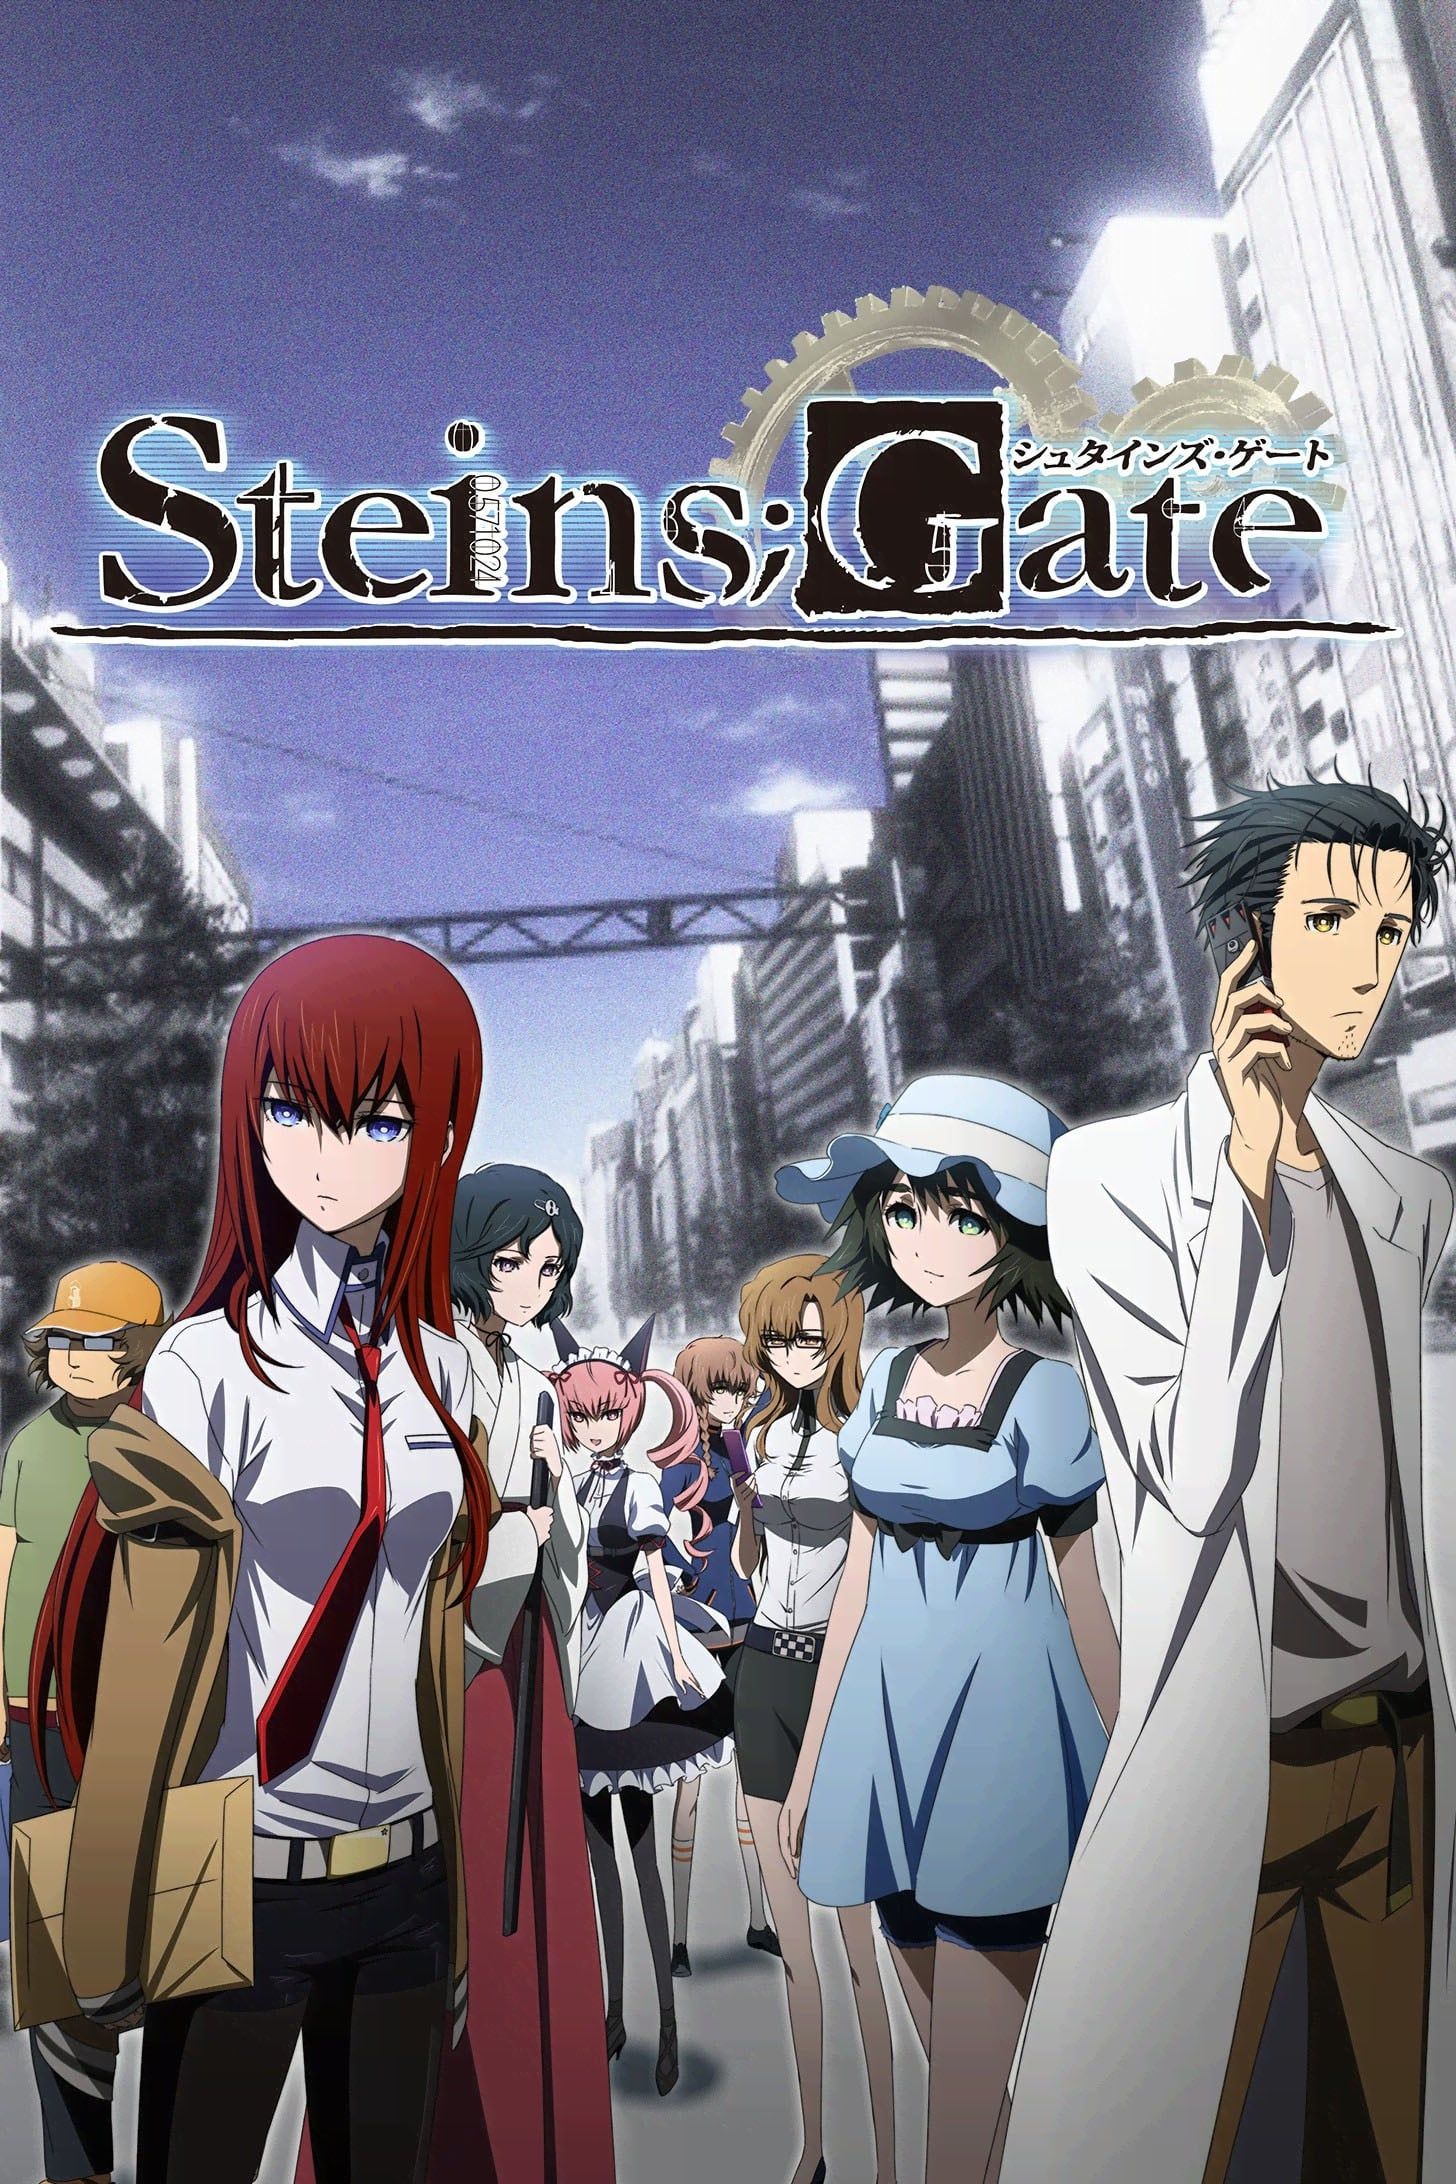 Steins;Gate: Kyoukaimenjou no Missing Link